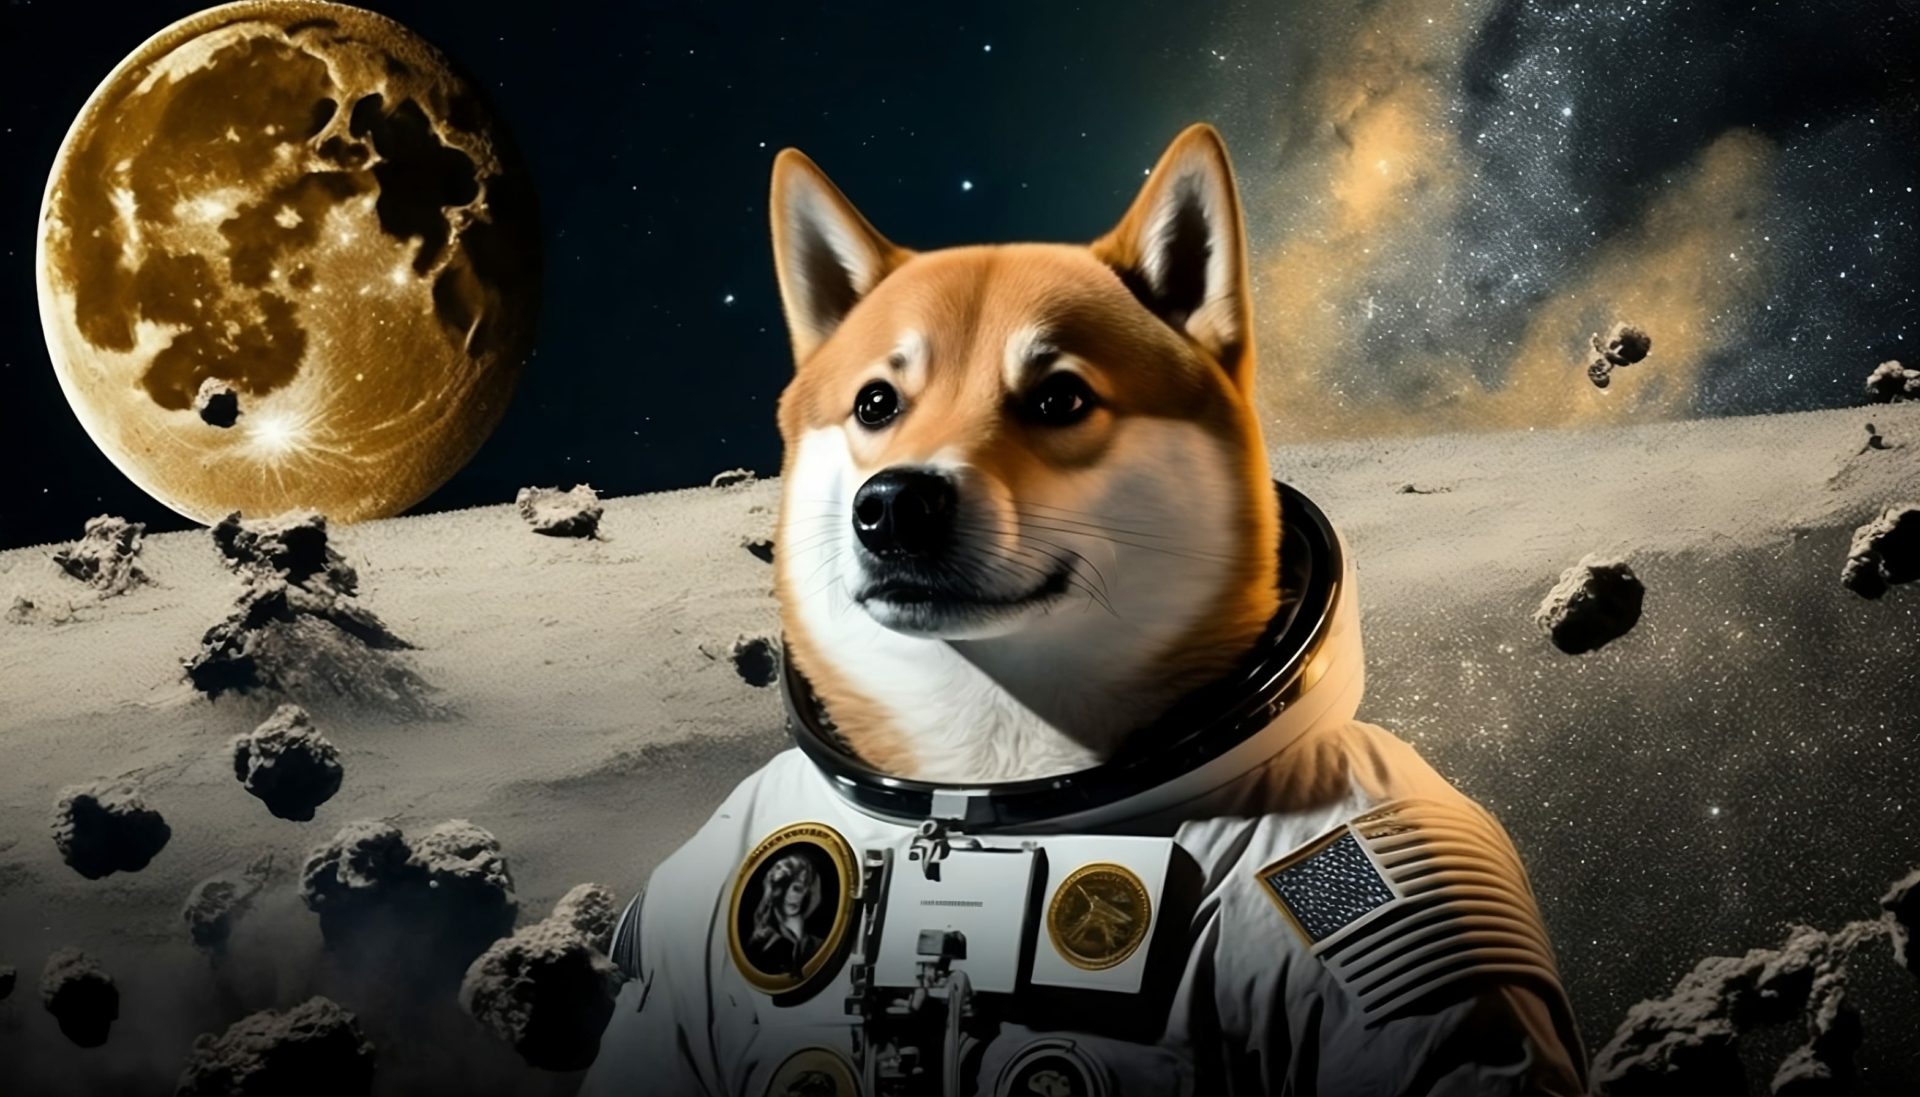 Dogecoin (DOGE)